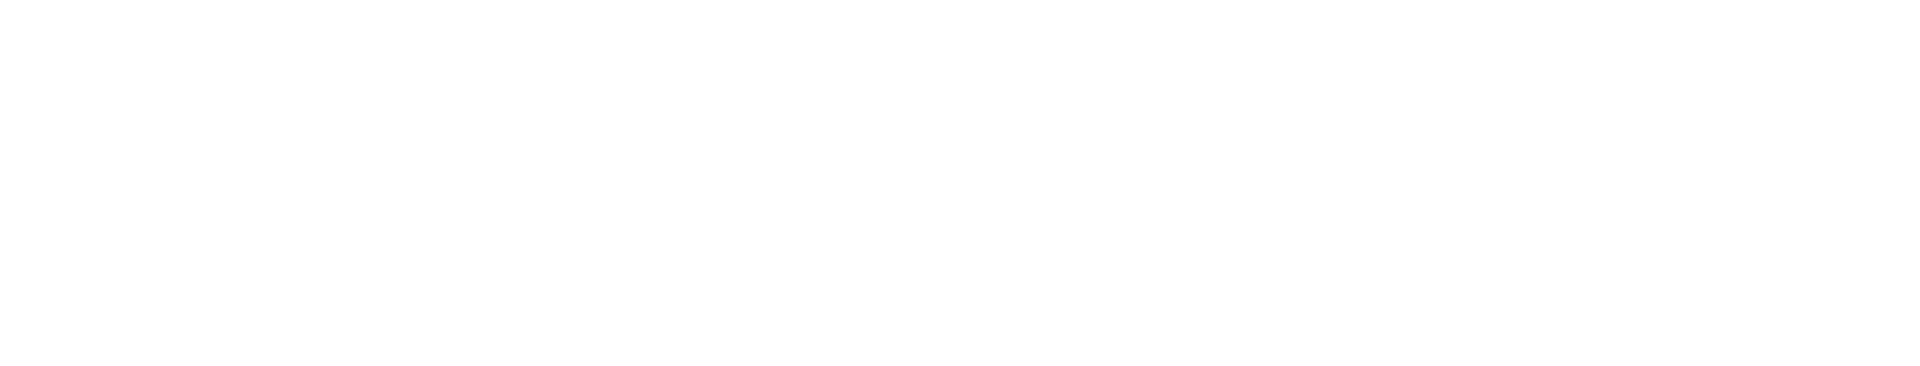 Dream Design (white) logo